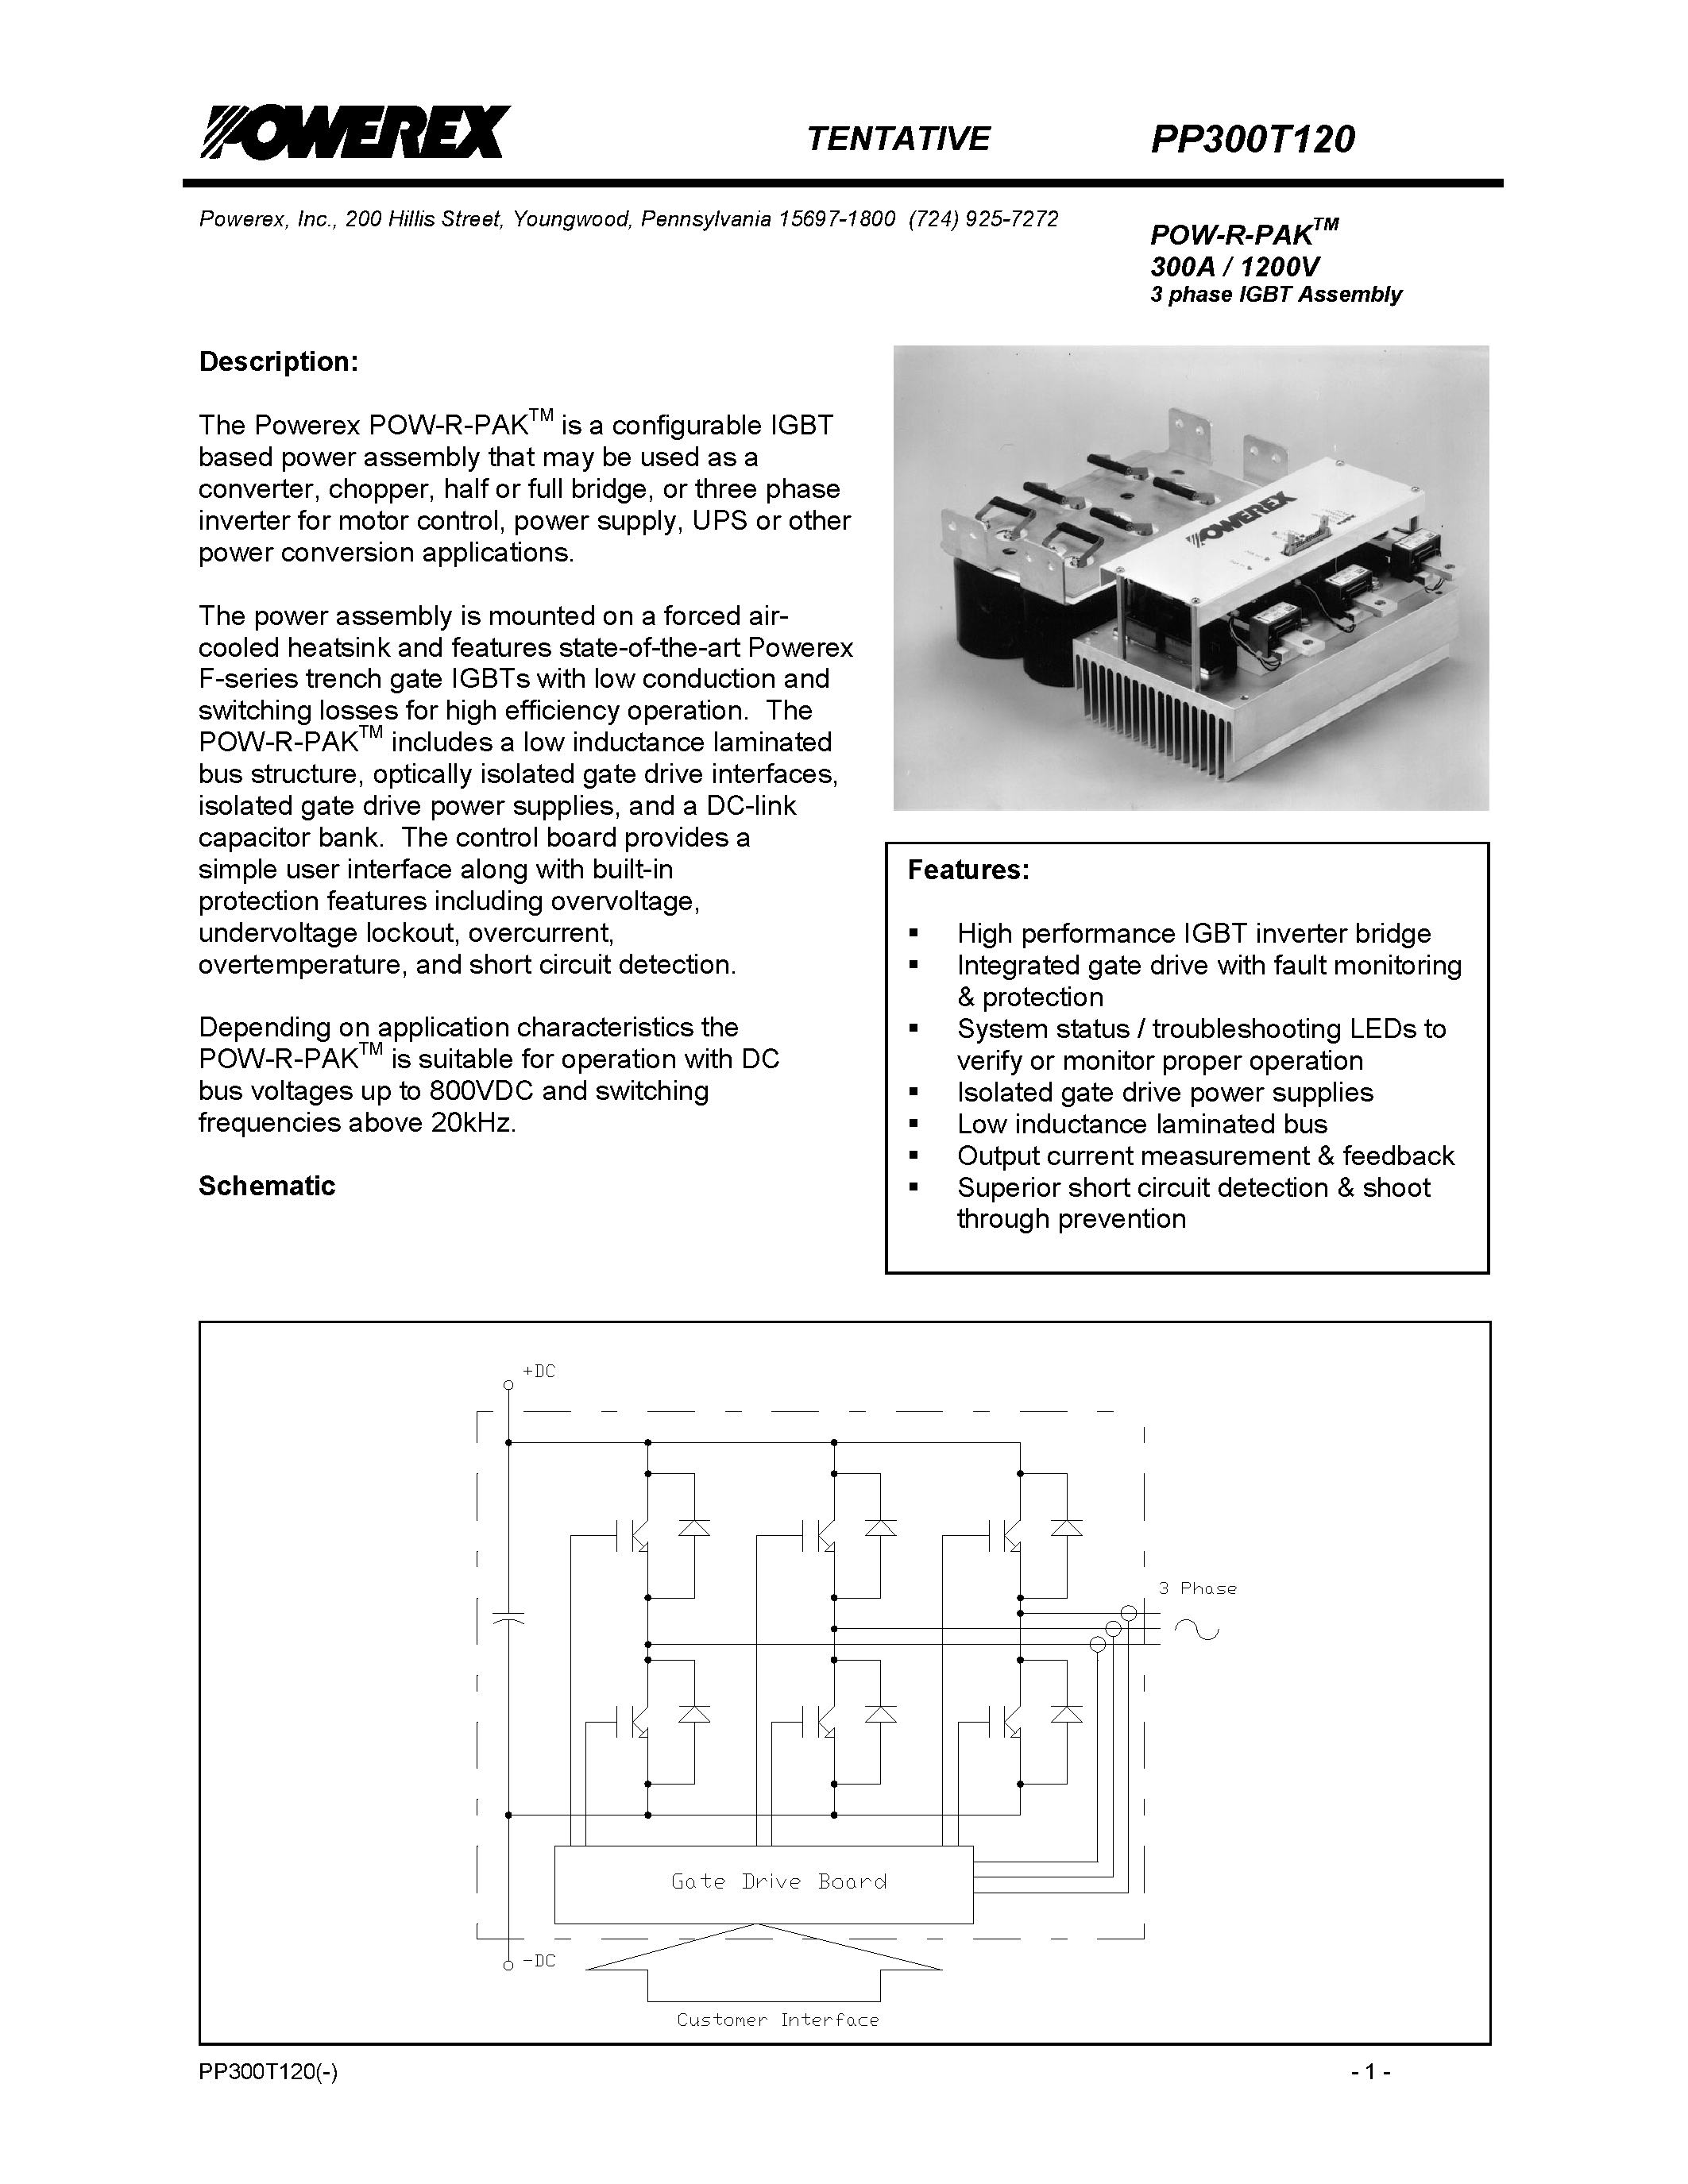 Datasheet PP300T120 - POW-R-PAK 300A / 1200V 3 phase IGBT Assembly page 1